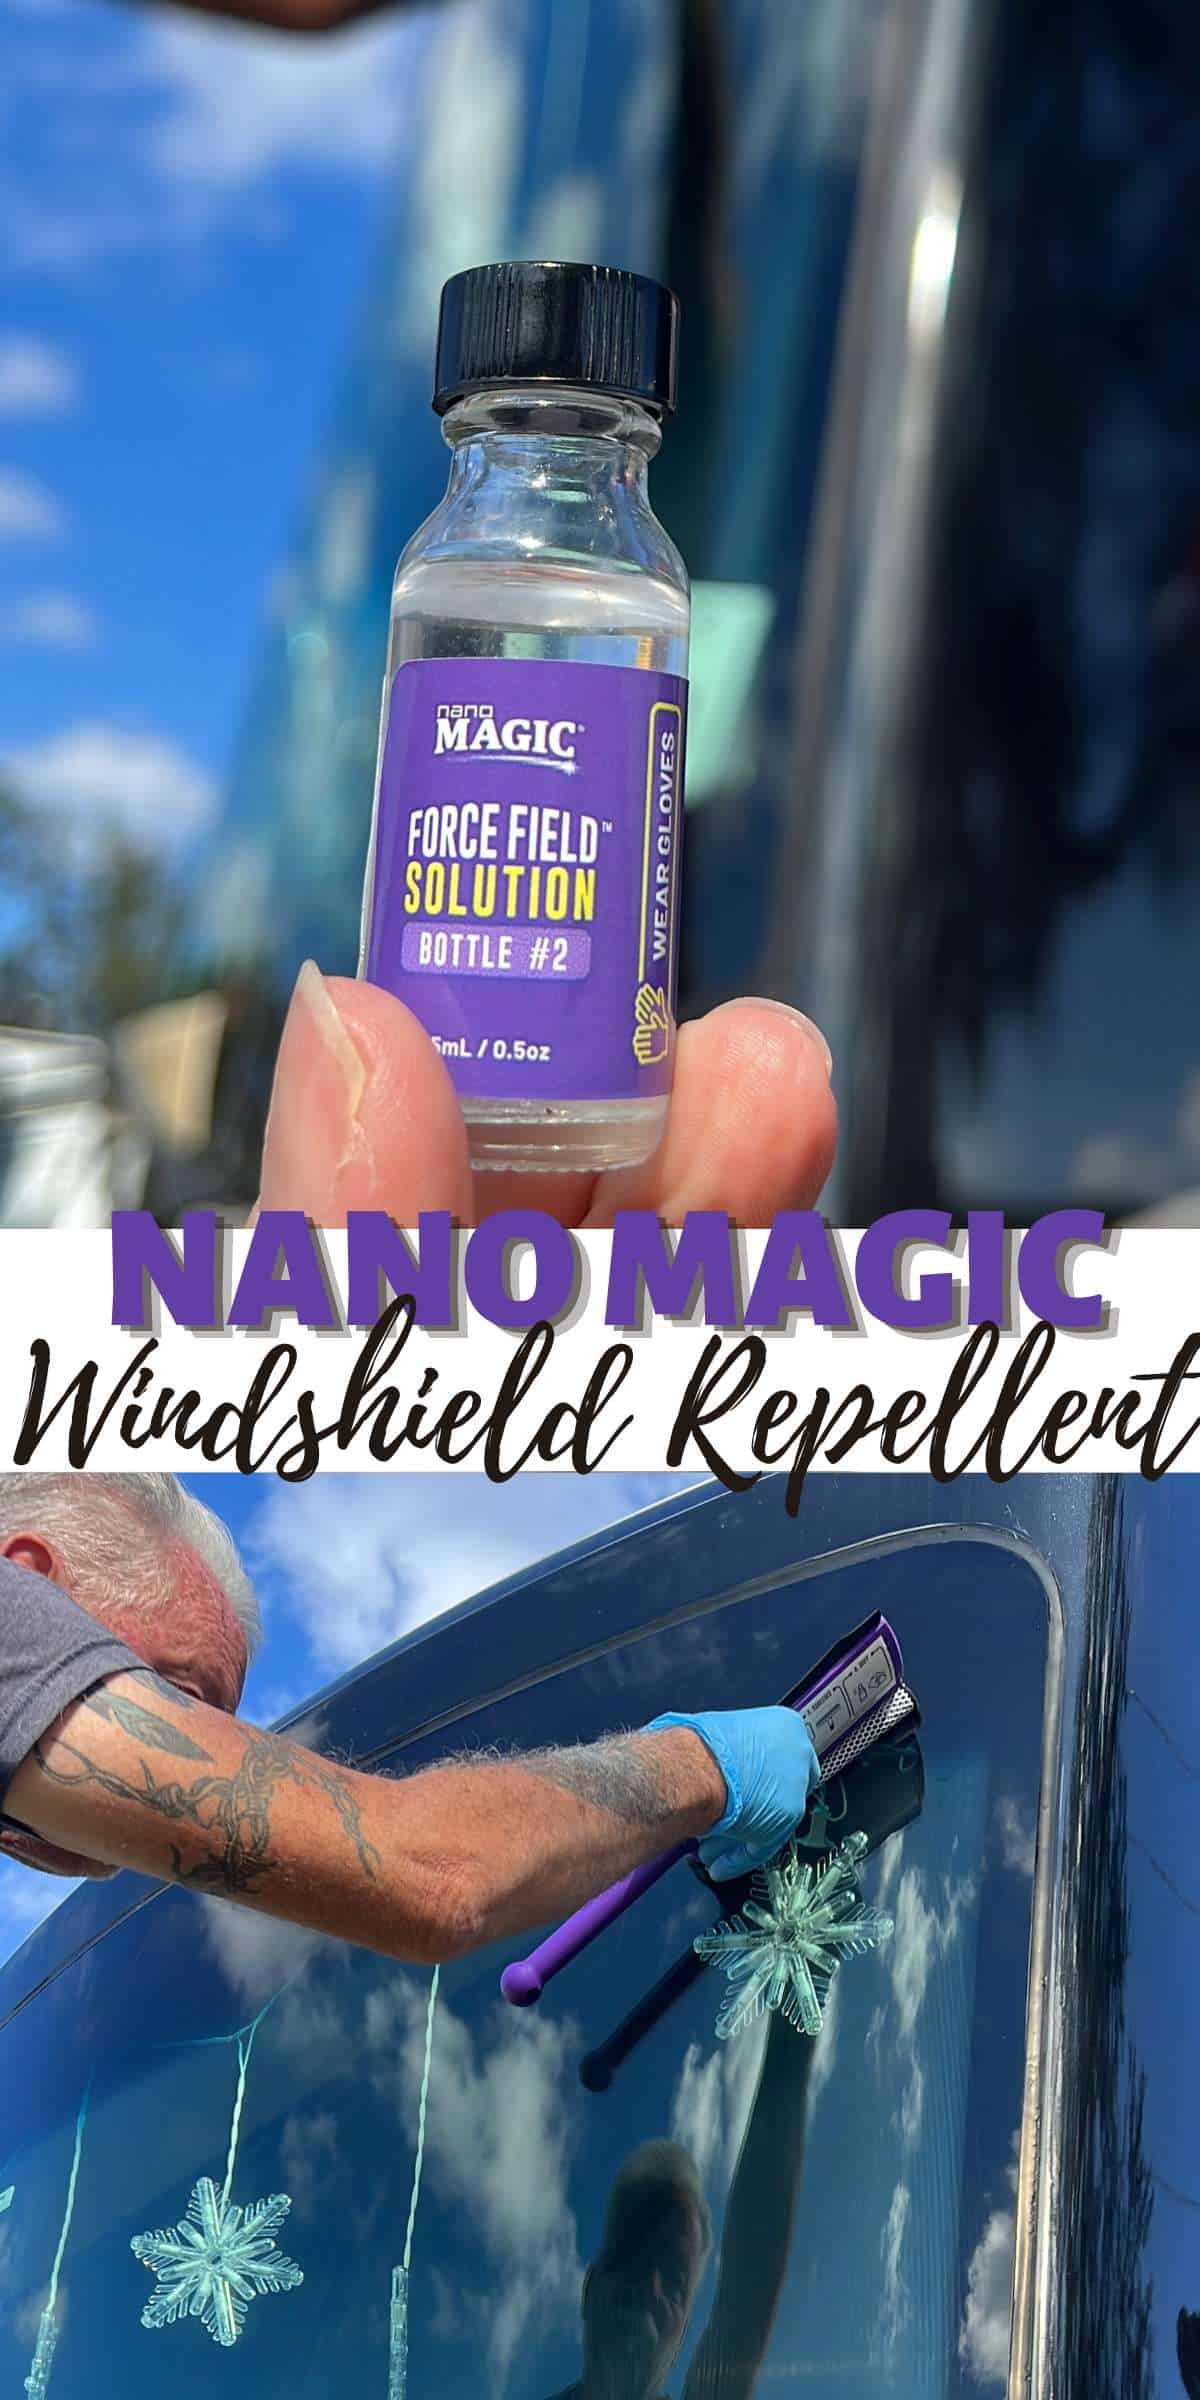 Windshield Rain Repellent Nano Magic Force Field